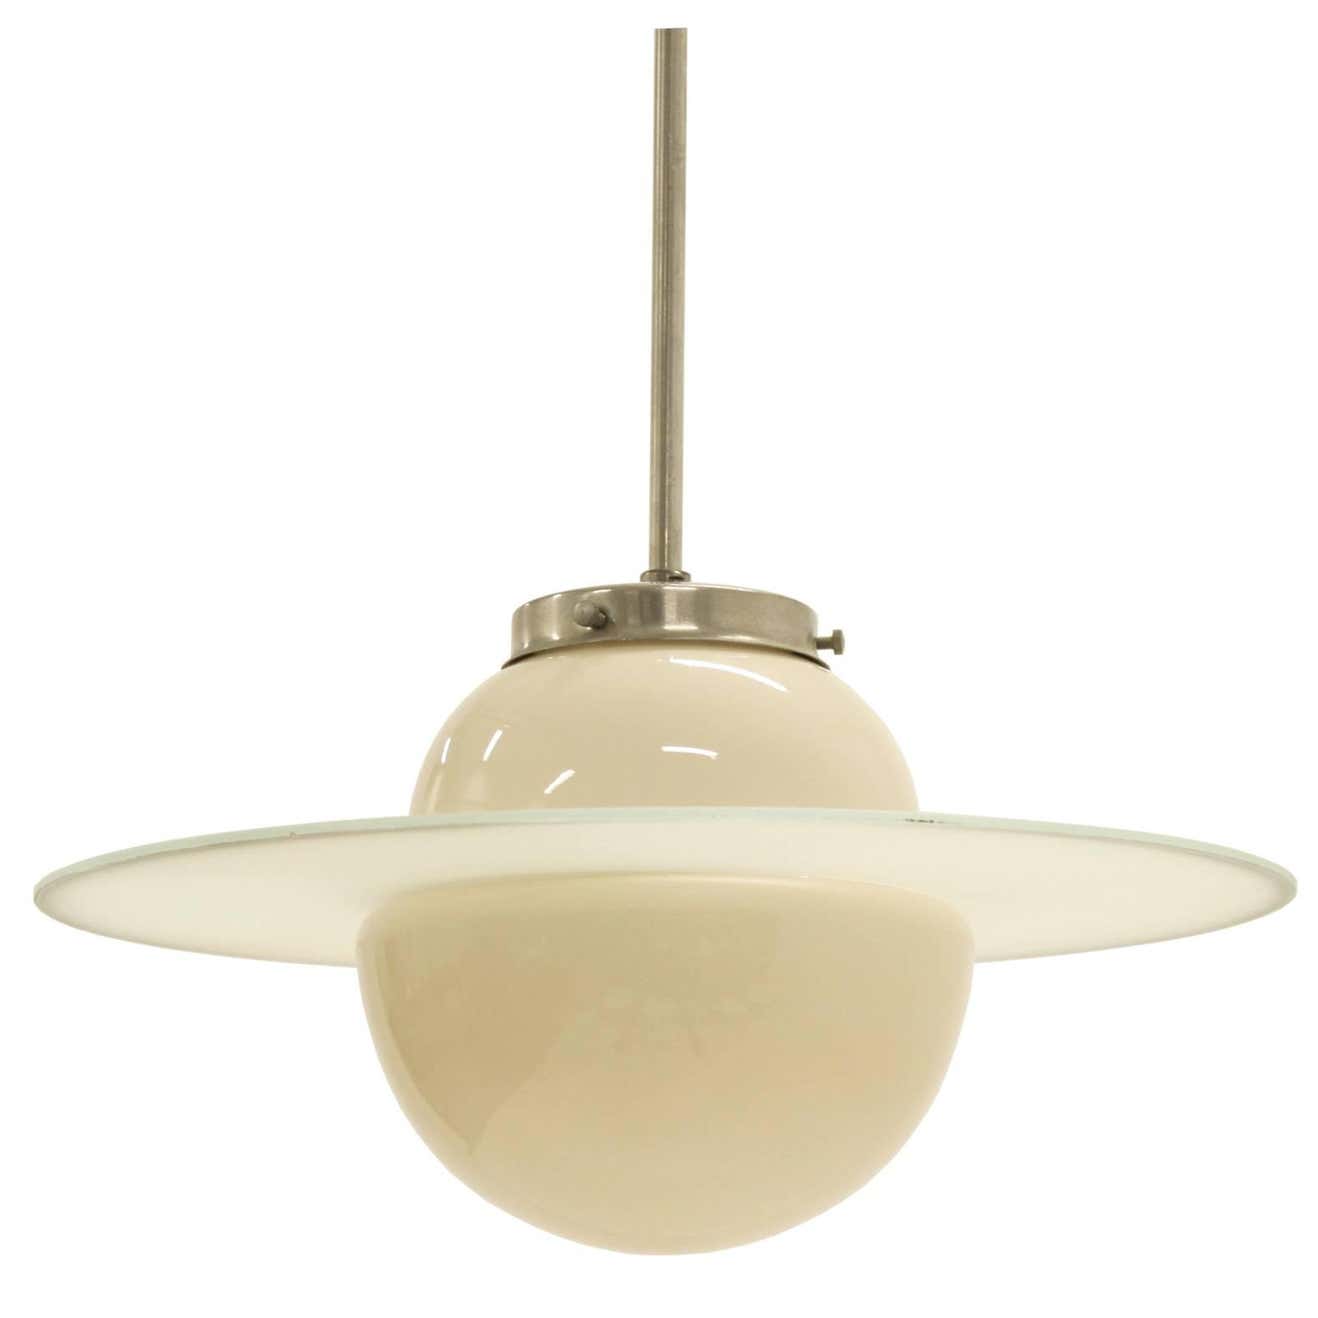 Scandinavian Functionalist Saturn Ceiling Light 1930s At 1stdibs